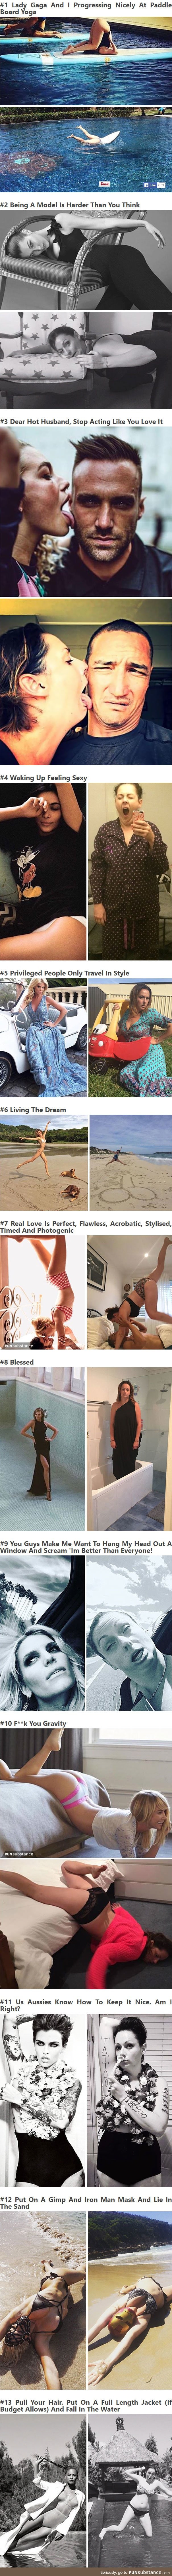 Woman Hilariously Recreates Celebrity Instagram Photos (13 Pics)